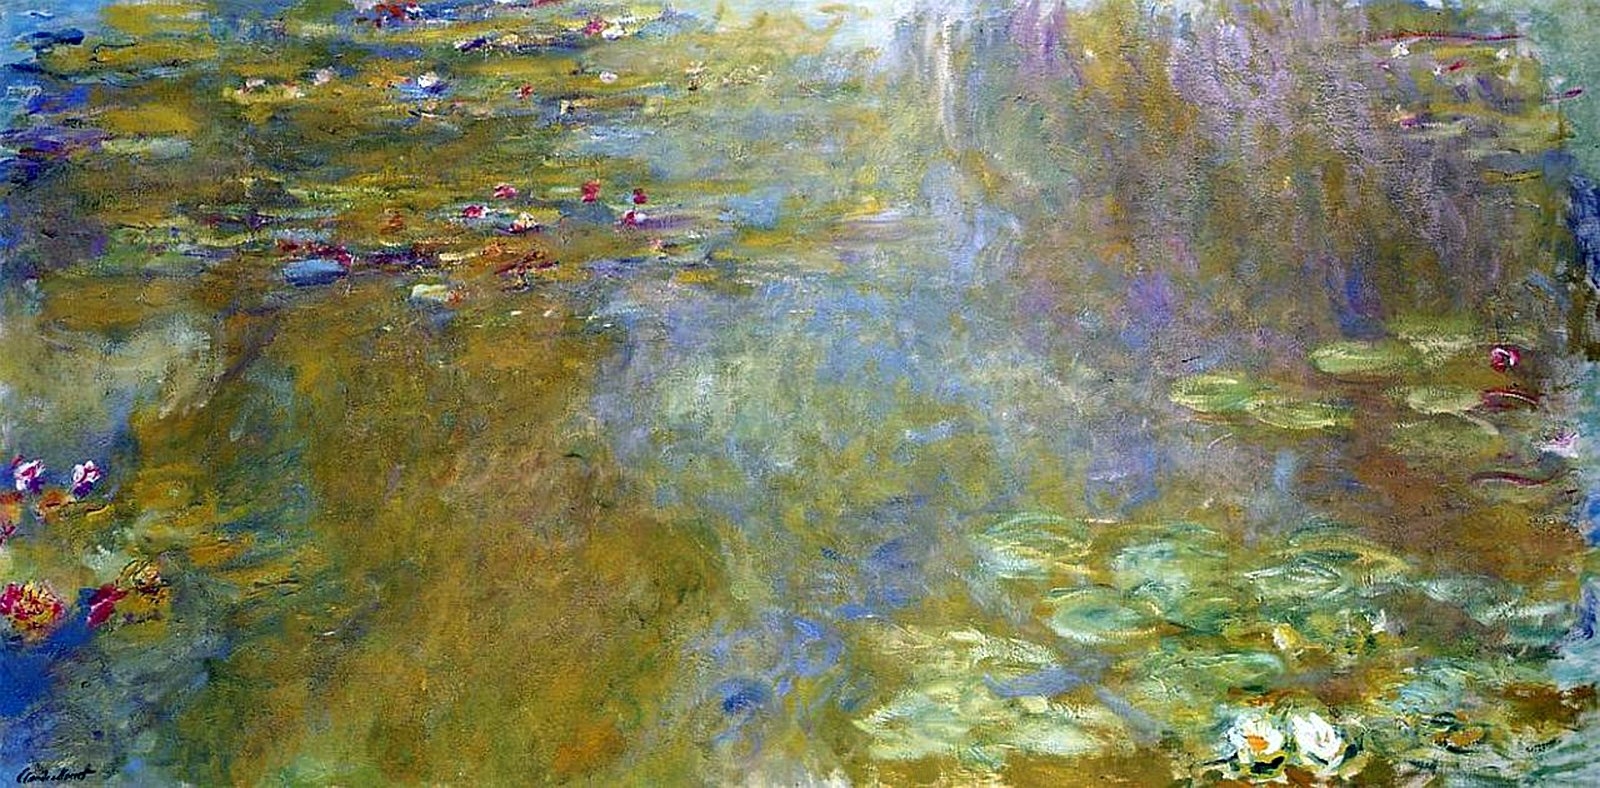 Claude+Monet-1840-1926 (410).jpg